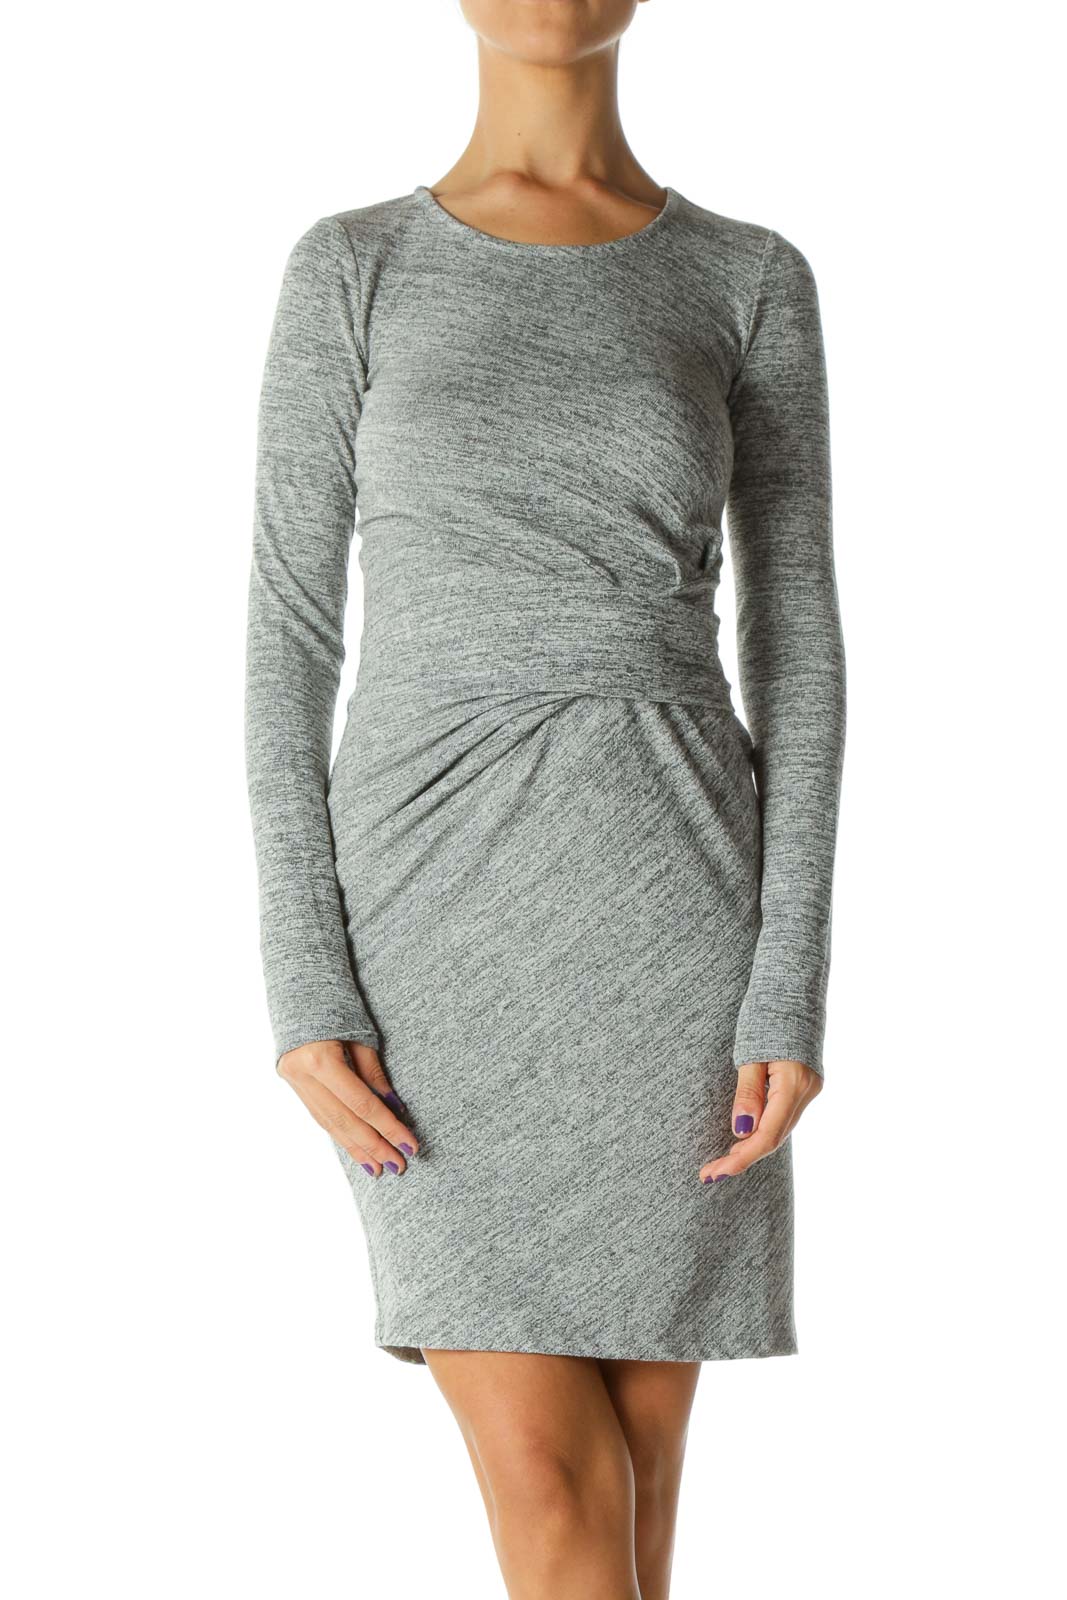 Gray Long Sleeve Knit Dress Front